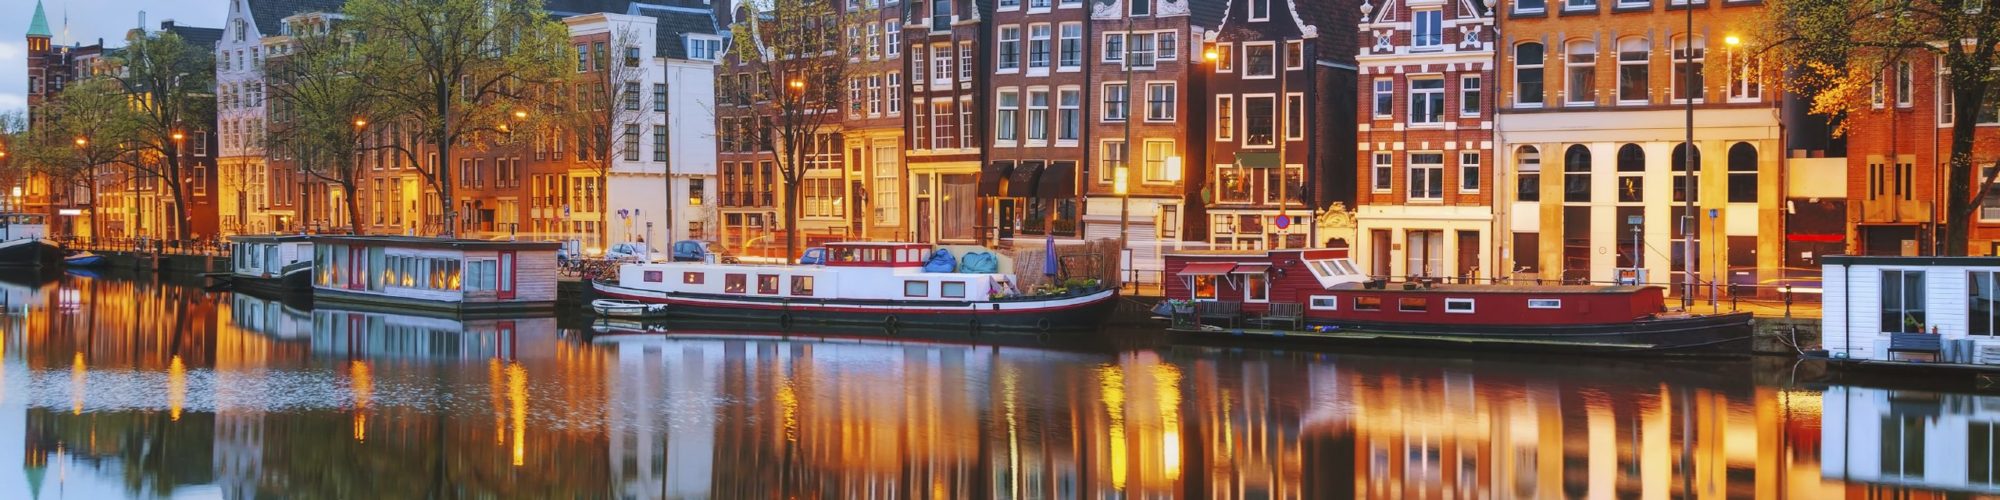 Netherlands Travel travel agents packages deals